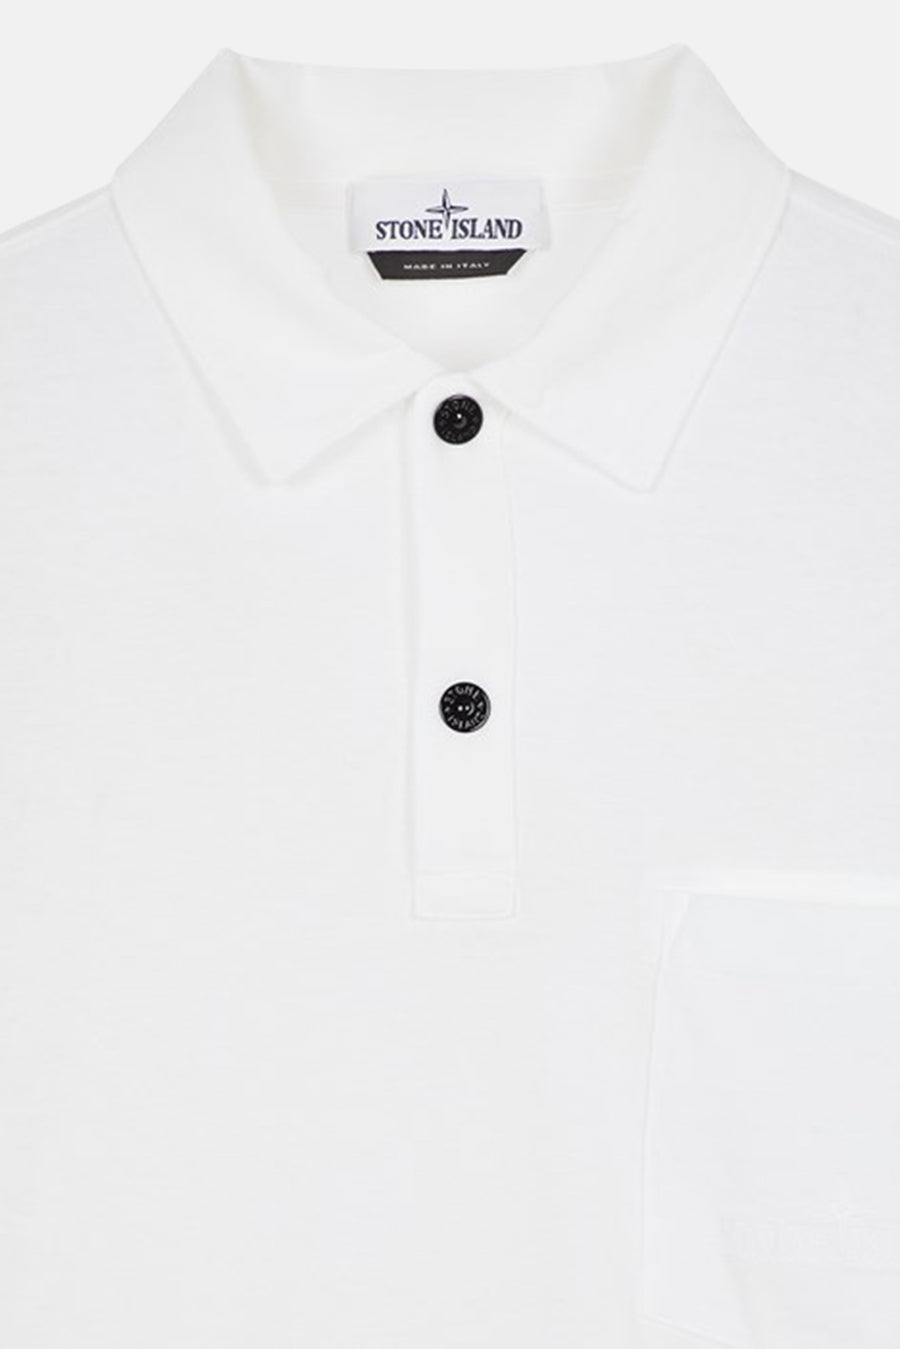 Garment Dyed Long Sleeve Polo White